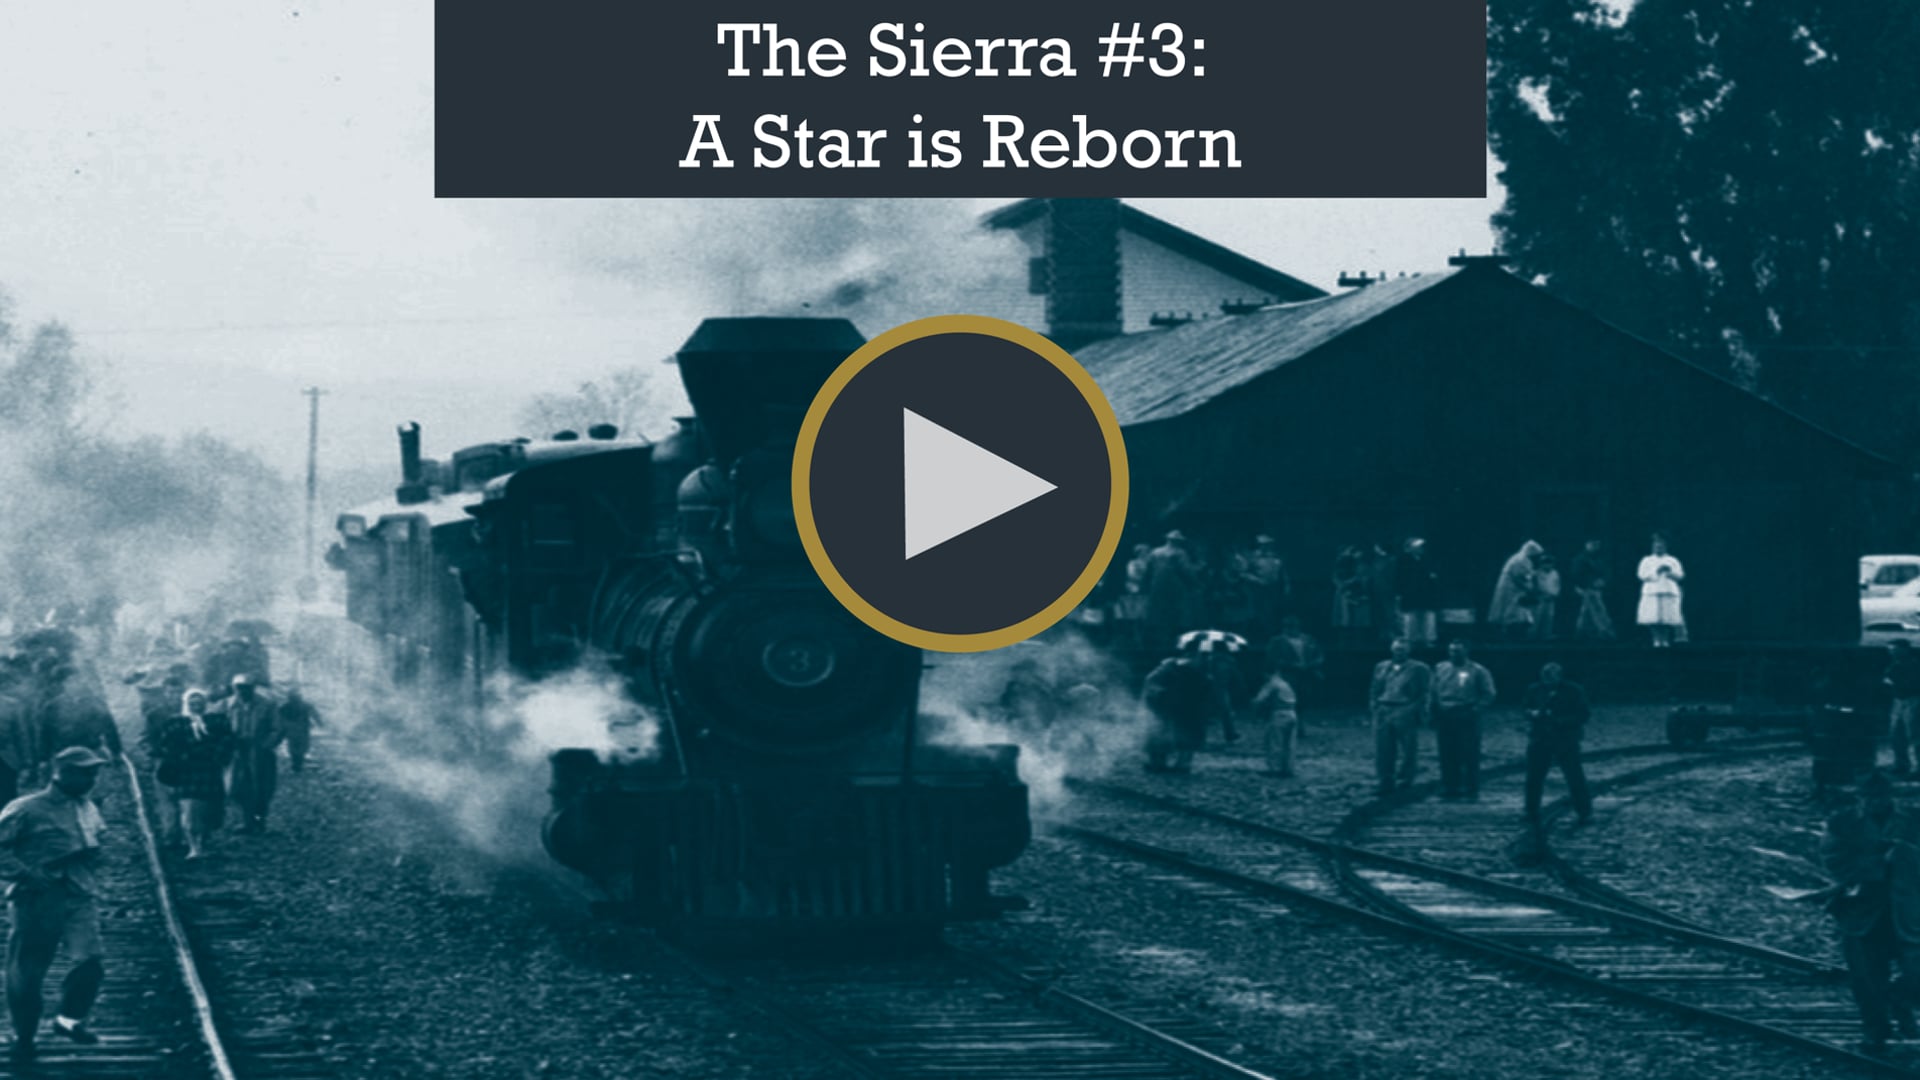 The Sierra #3 Locomotive: A Star is Reborn